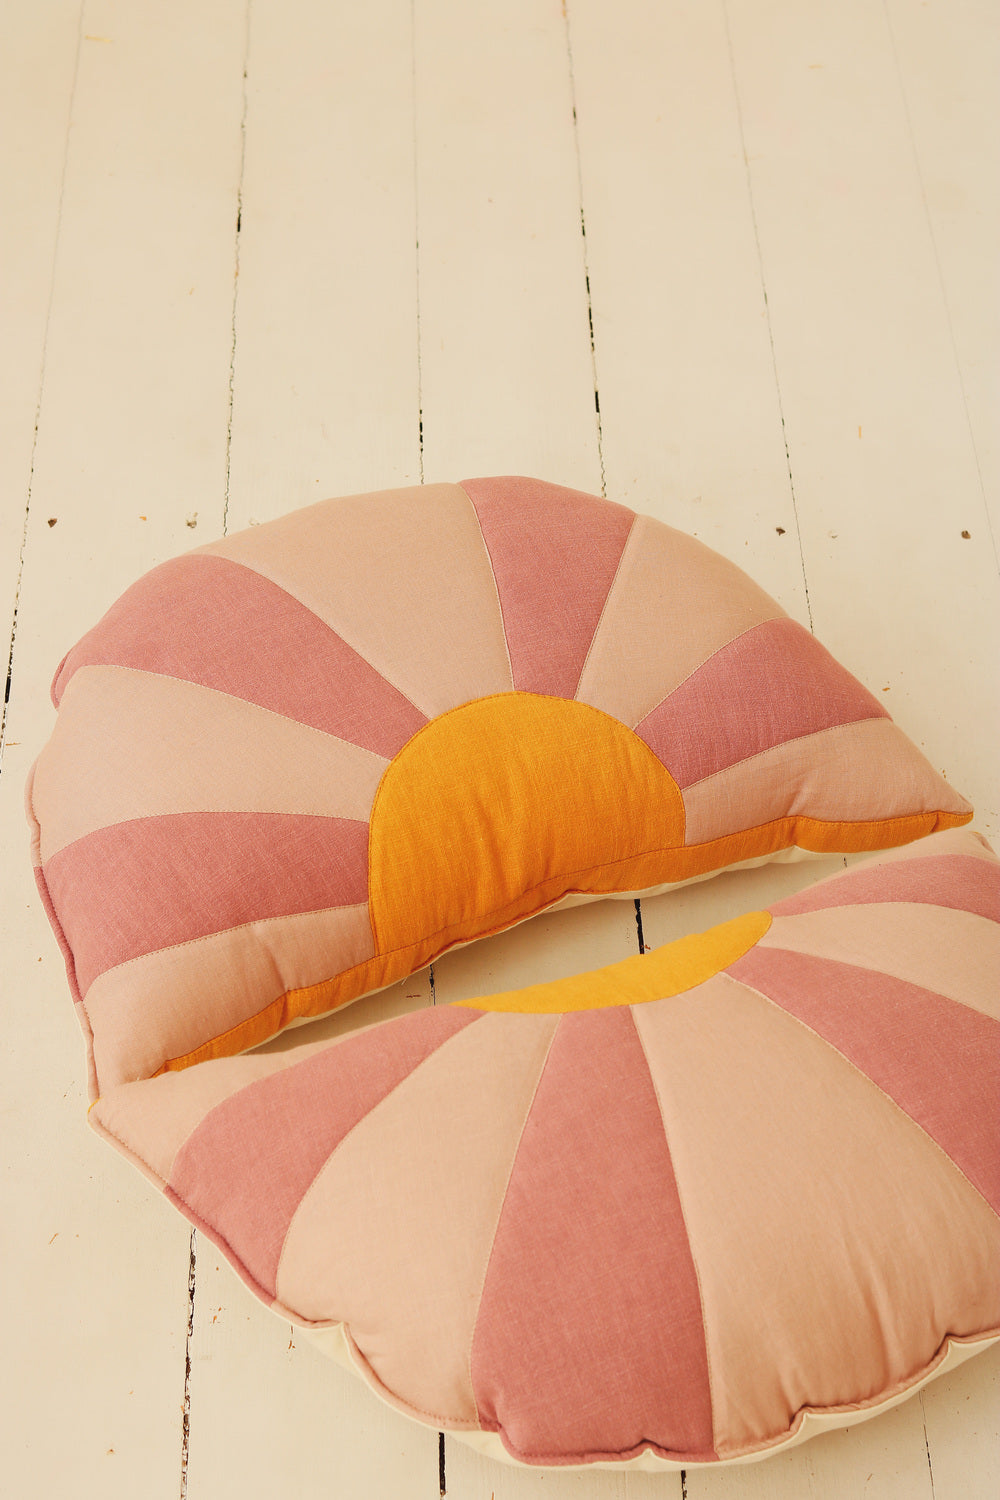 Sun Pillow “Lazy Santa Cruz” by Moi Mili